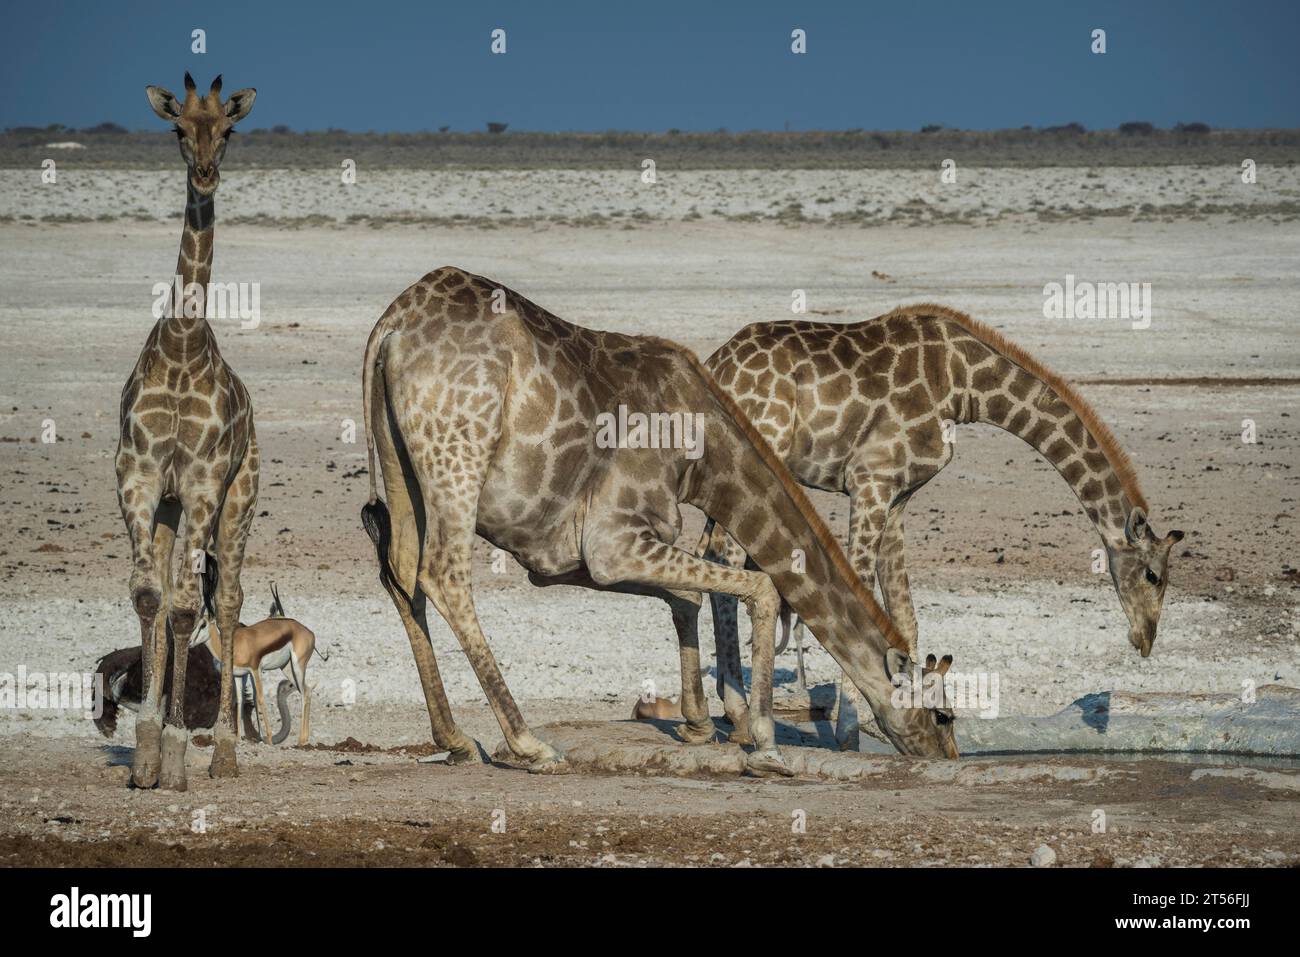 Angolan giraffes (Giraffa camelopardalis angolensis) at a waterhole, Etosha National Park, Namibia Stock Photo